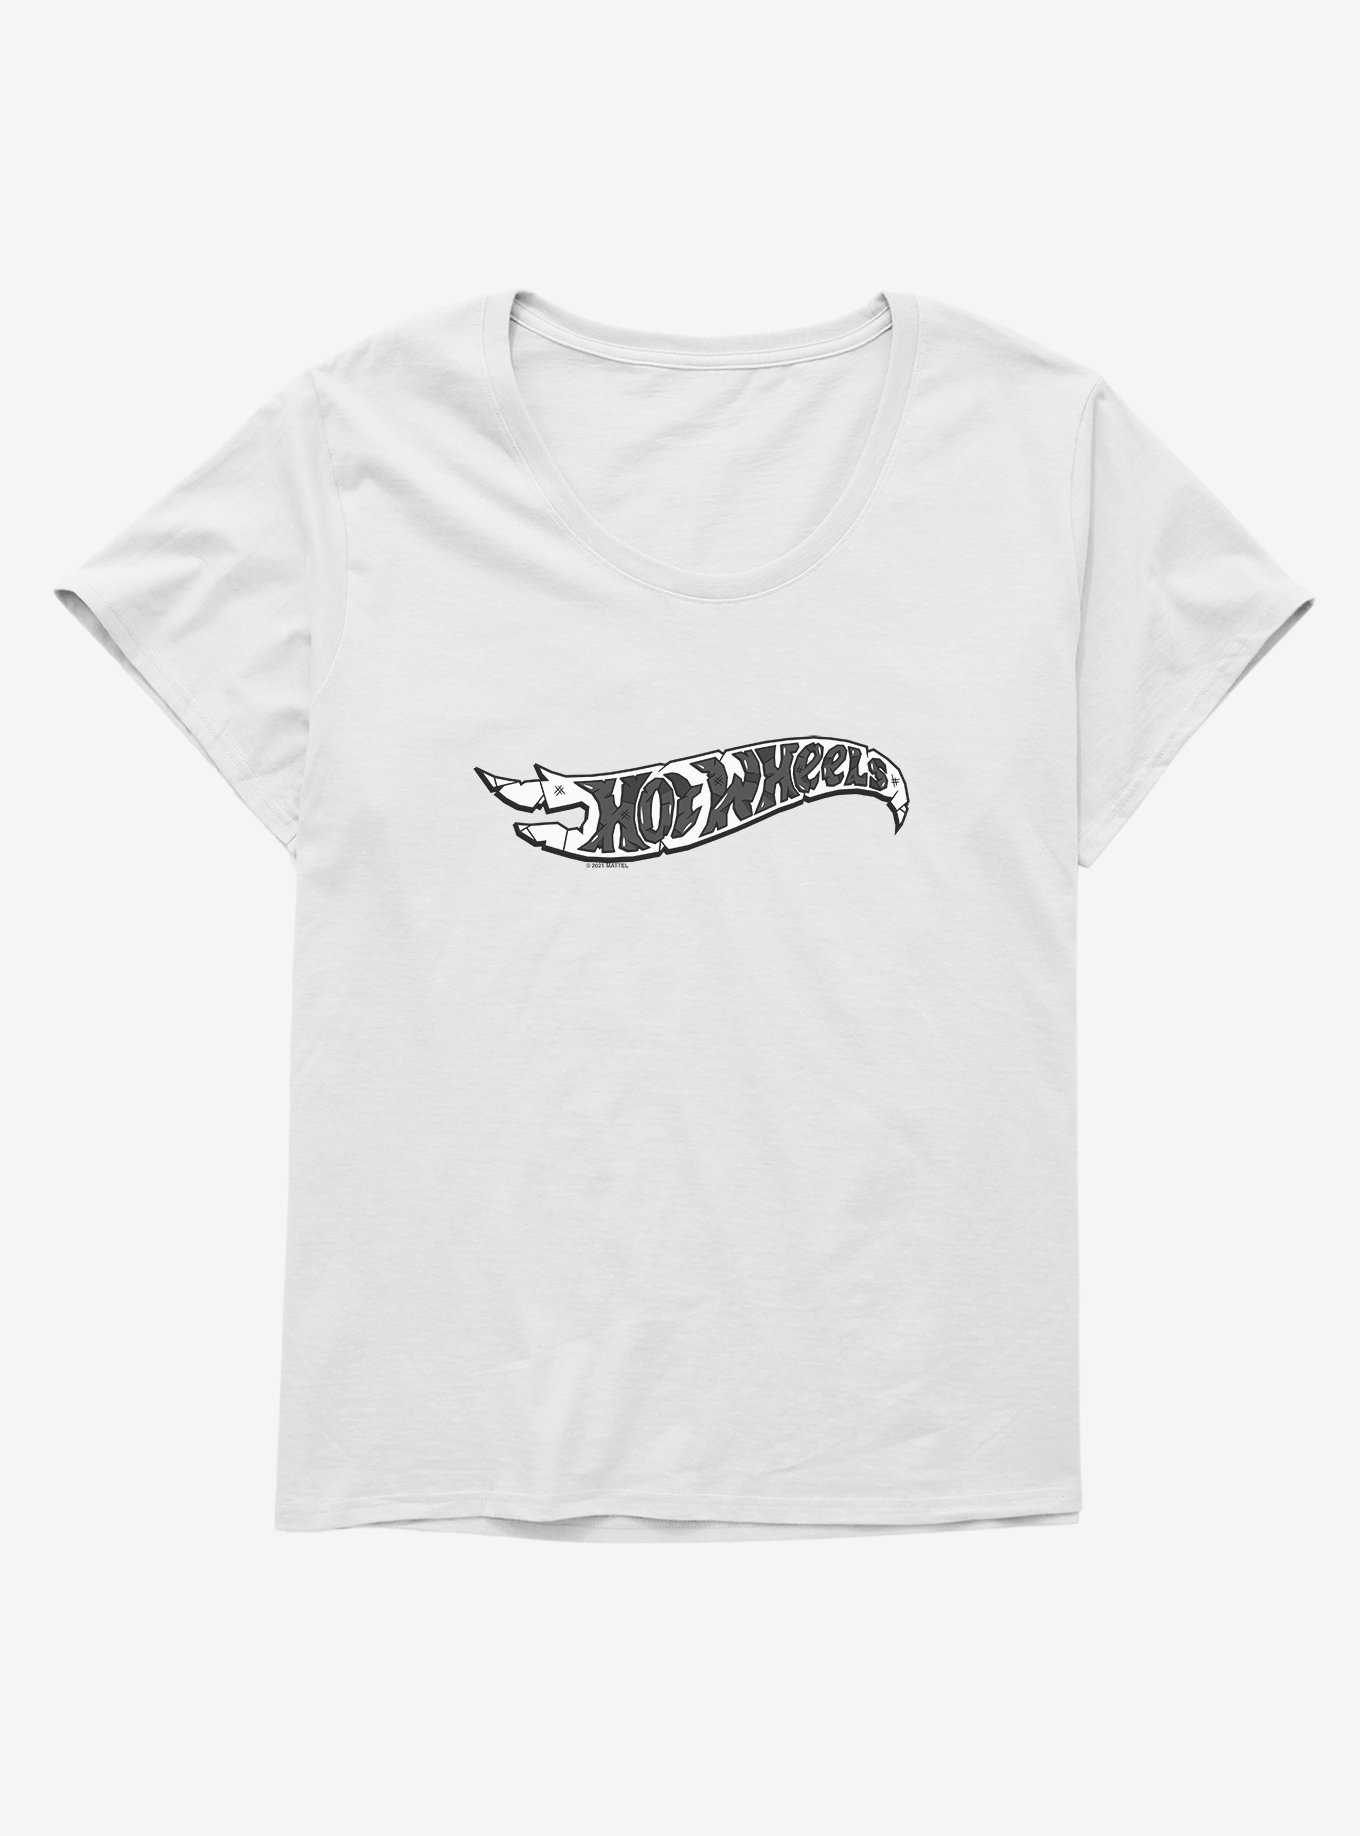 Hot Wheels Tattered Logo Girls T-Shirt Plus Size, , hi-res